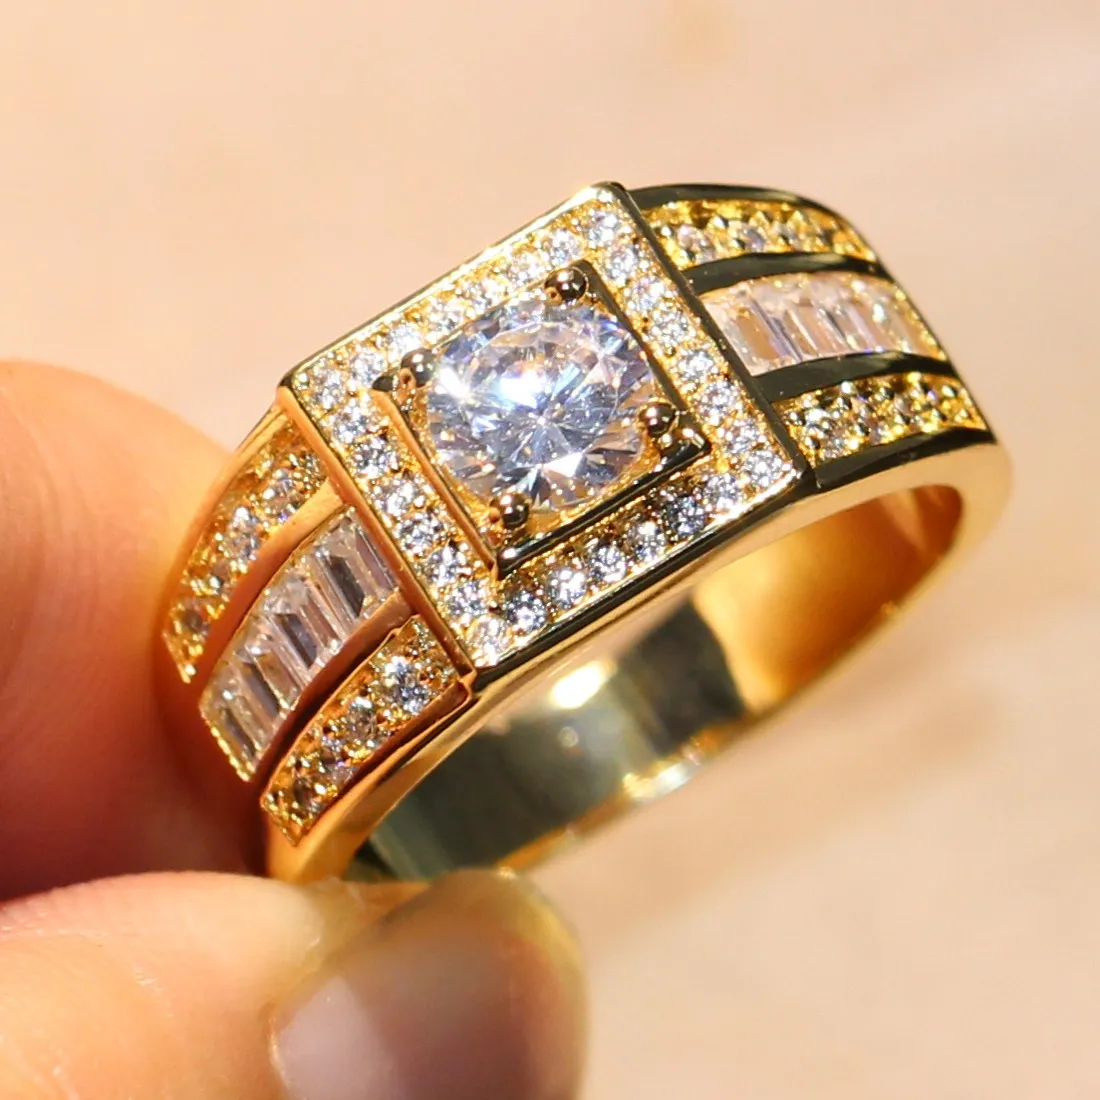 Stunning Original Handmade Luxury Jewelry 10KT Yellow Gold Filled Round White Topaz CZ Diamond Gemstones Men Wedding Band Ring For2110